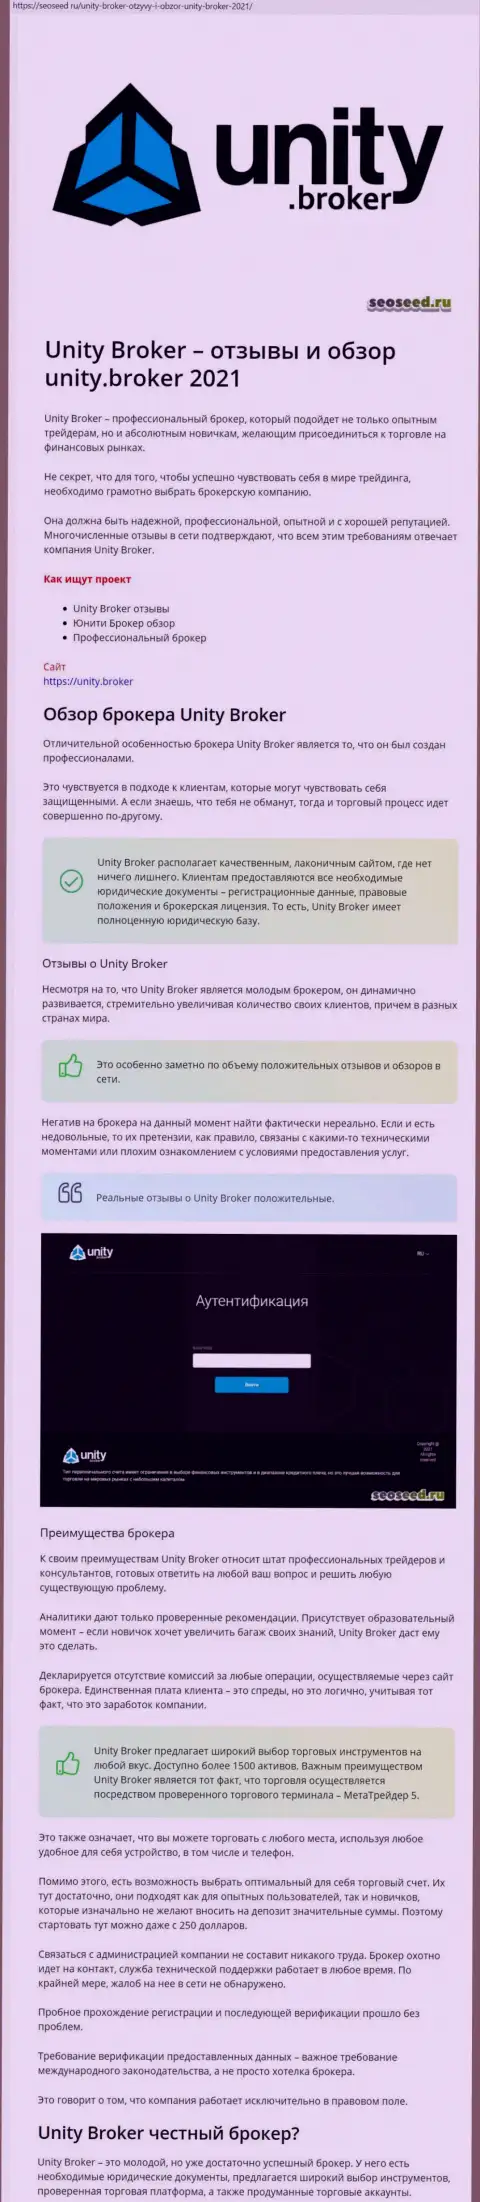 Материал об Форекс дилере Unity Broker на ресурсе СеоСид Ру